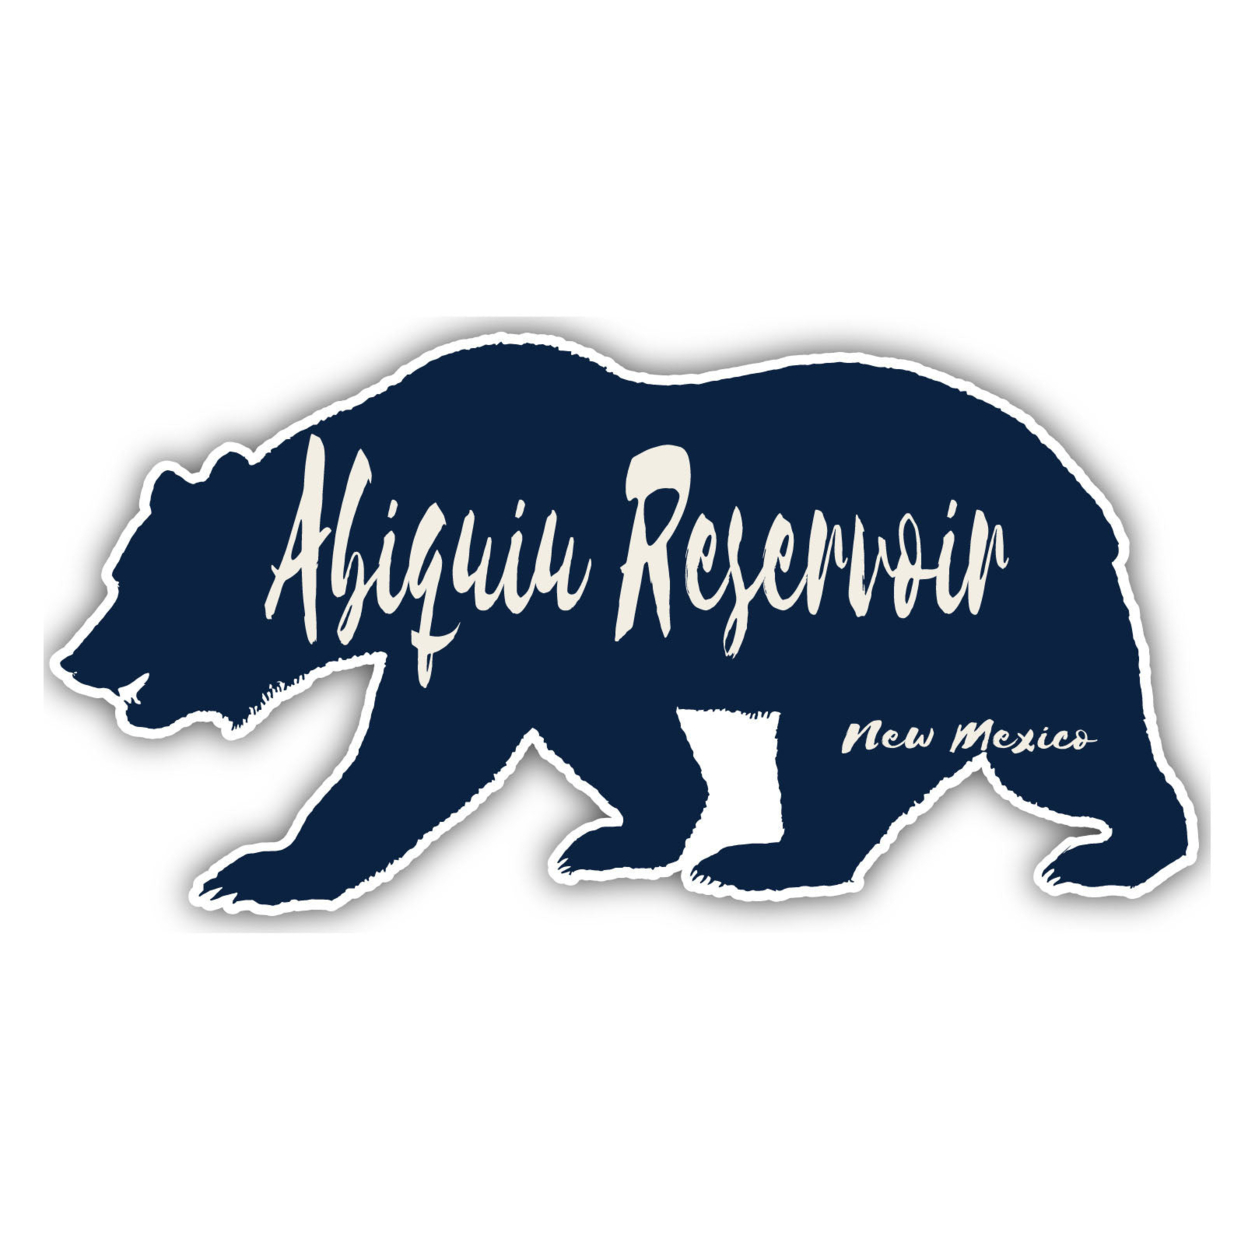 Abiquiu Reservoir New Mexico Souvenir Decorative Stickers (Choose Theme And Size) - 4-Pack, 10-Inch, Bear